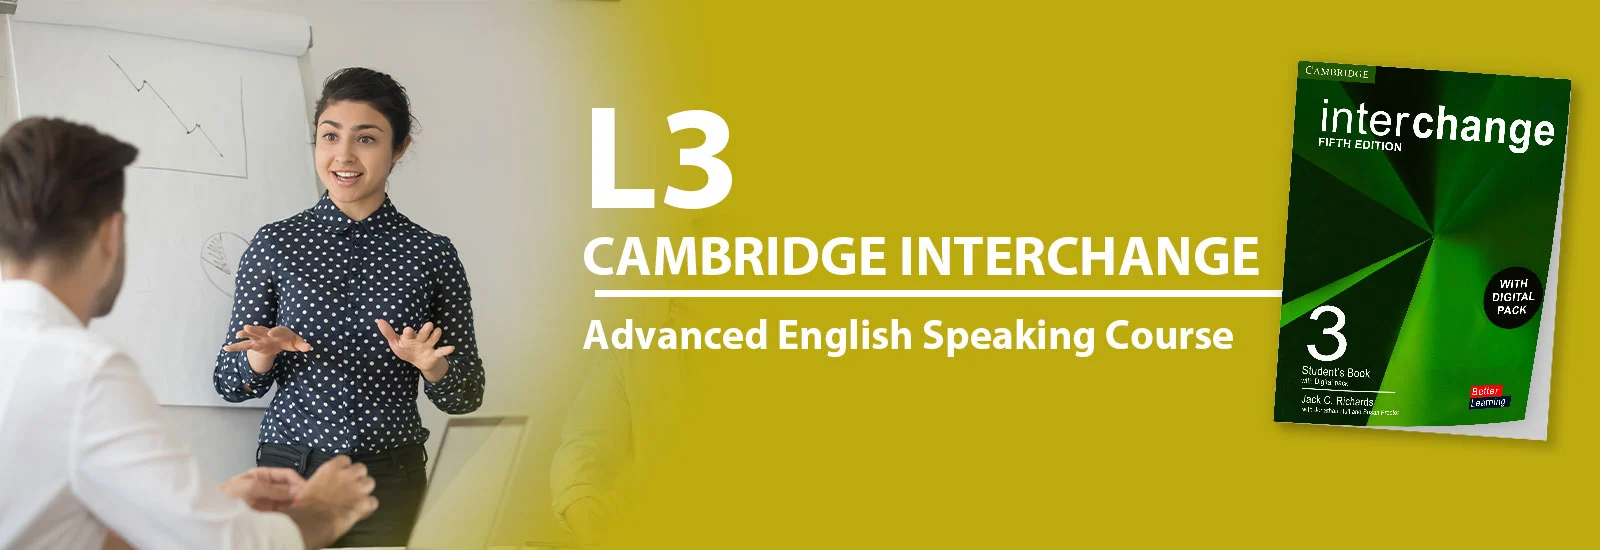 Cambridge Interchange level-3 – Advanced English Course